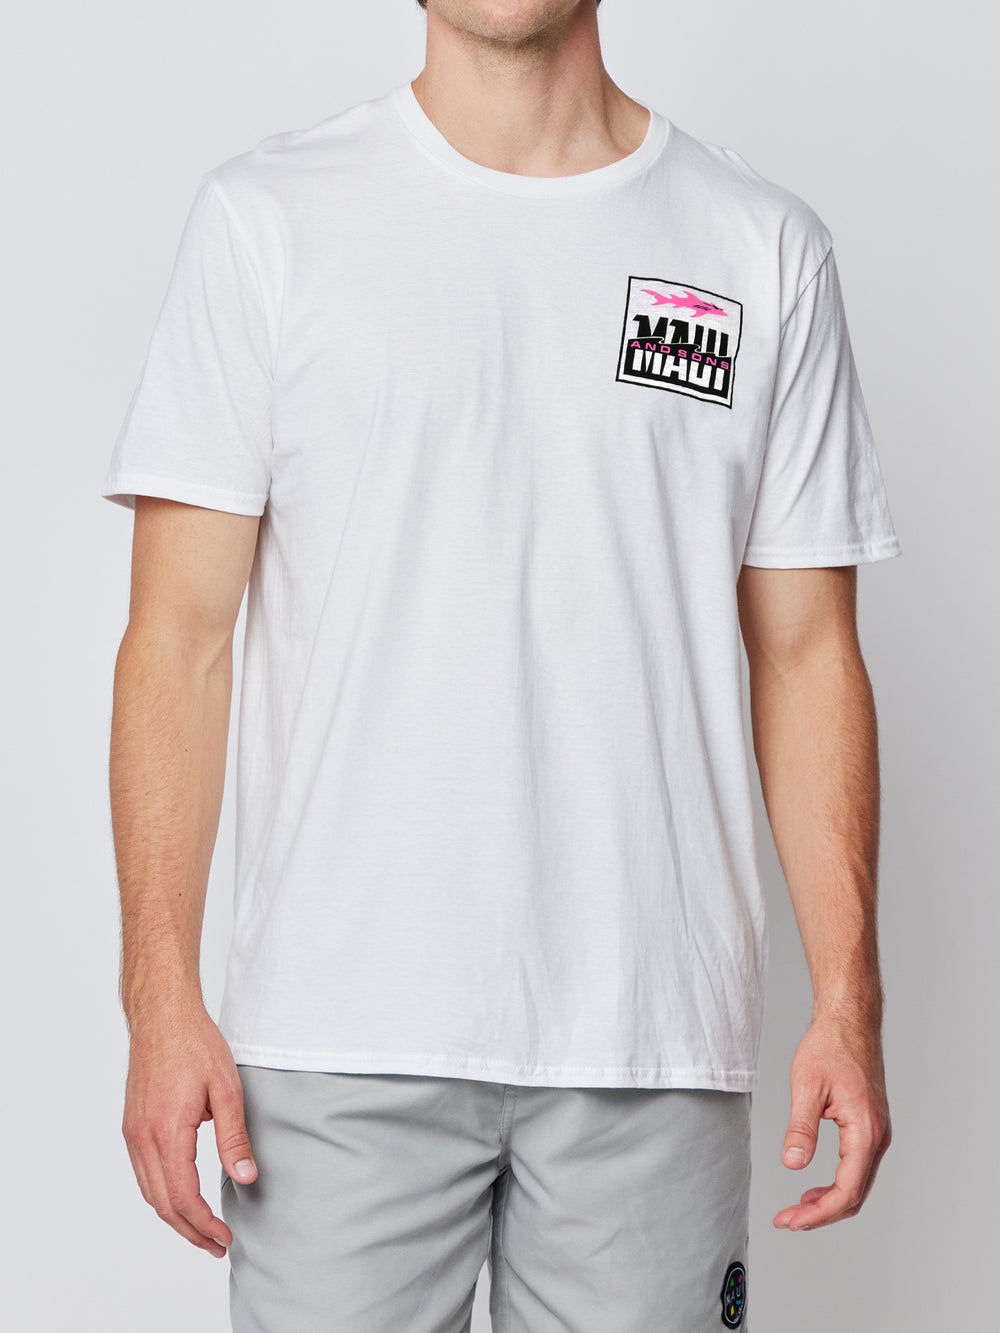 Mens T-Shirts | Maui and Sons